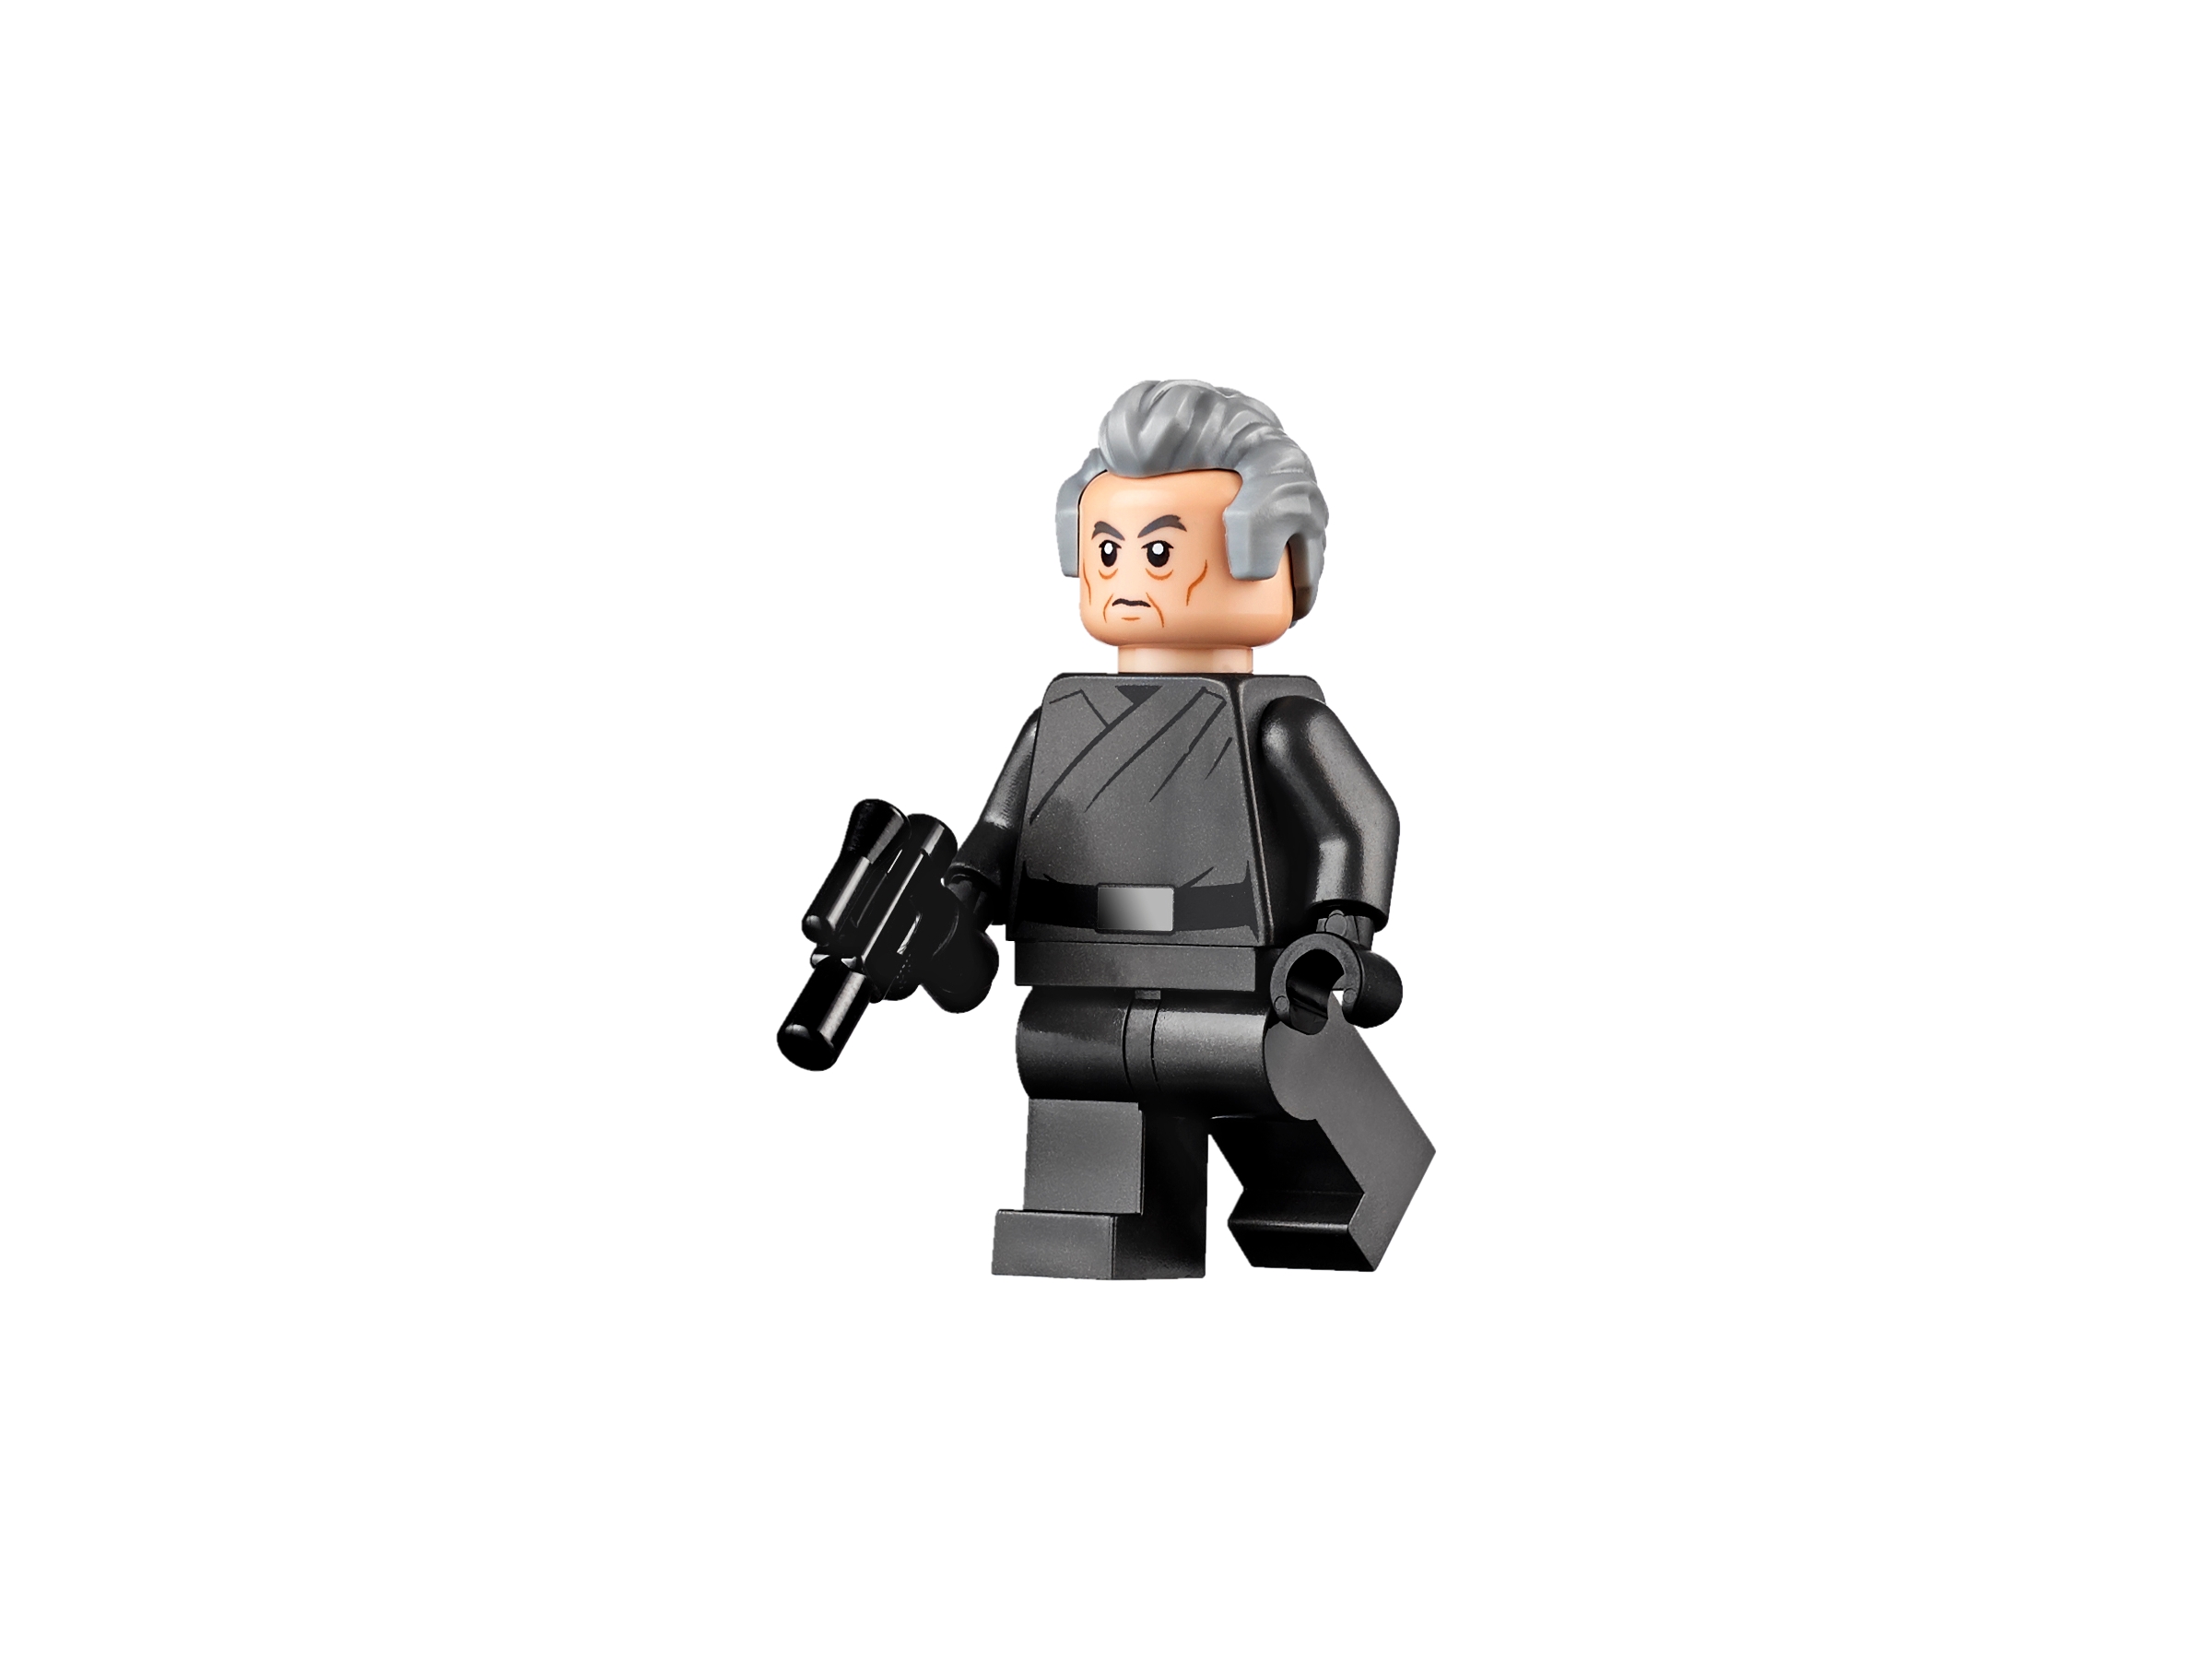 LEGO Star Wars 75256 pas cher, La navette de Kylo Ren